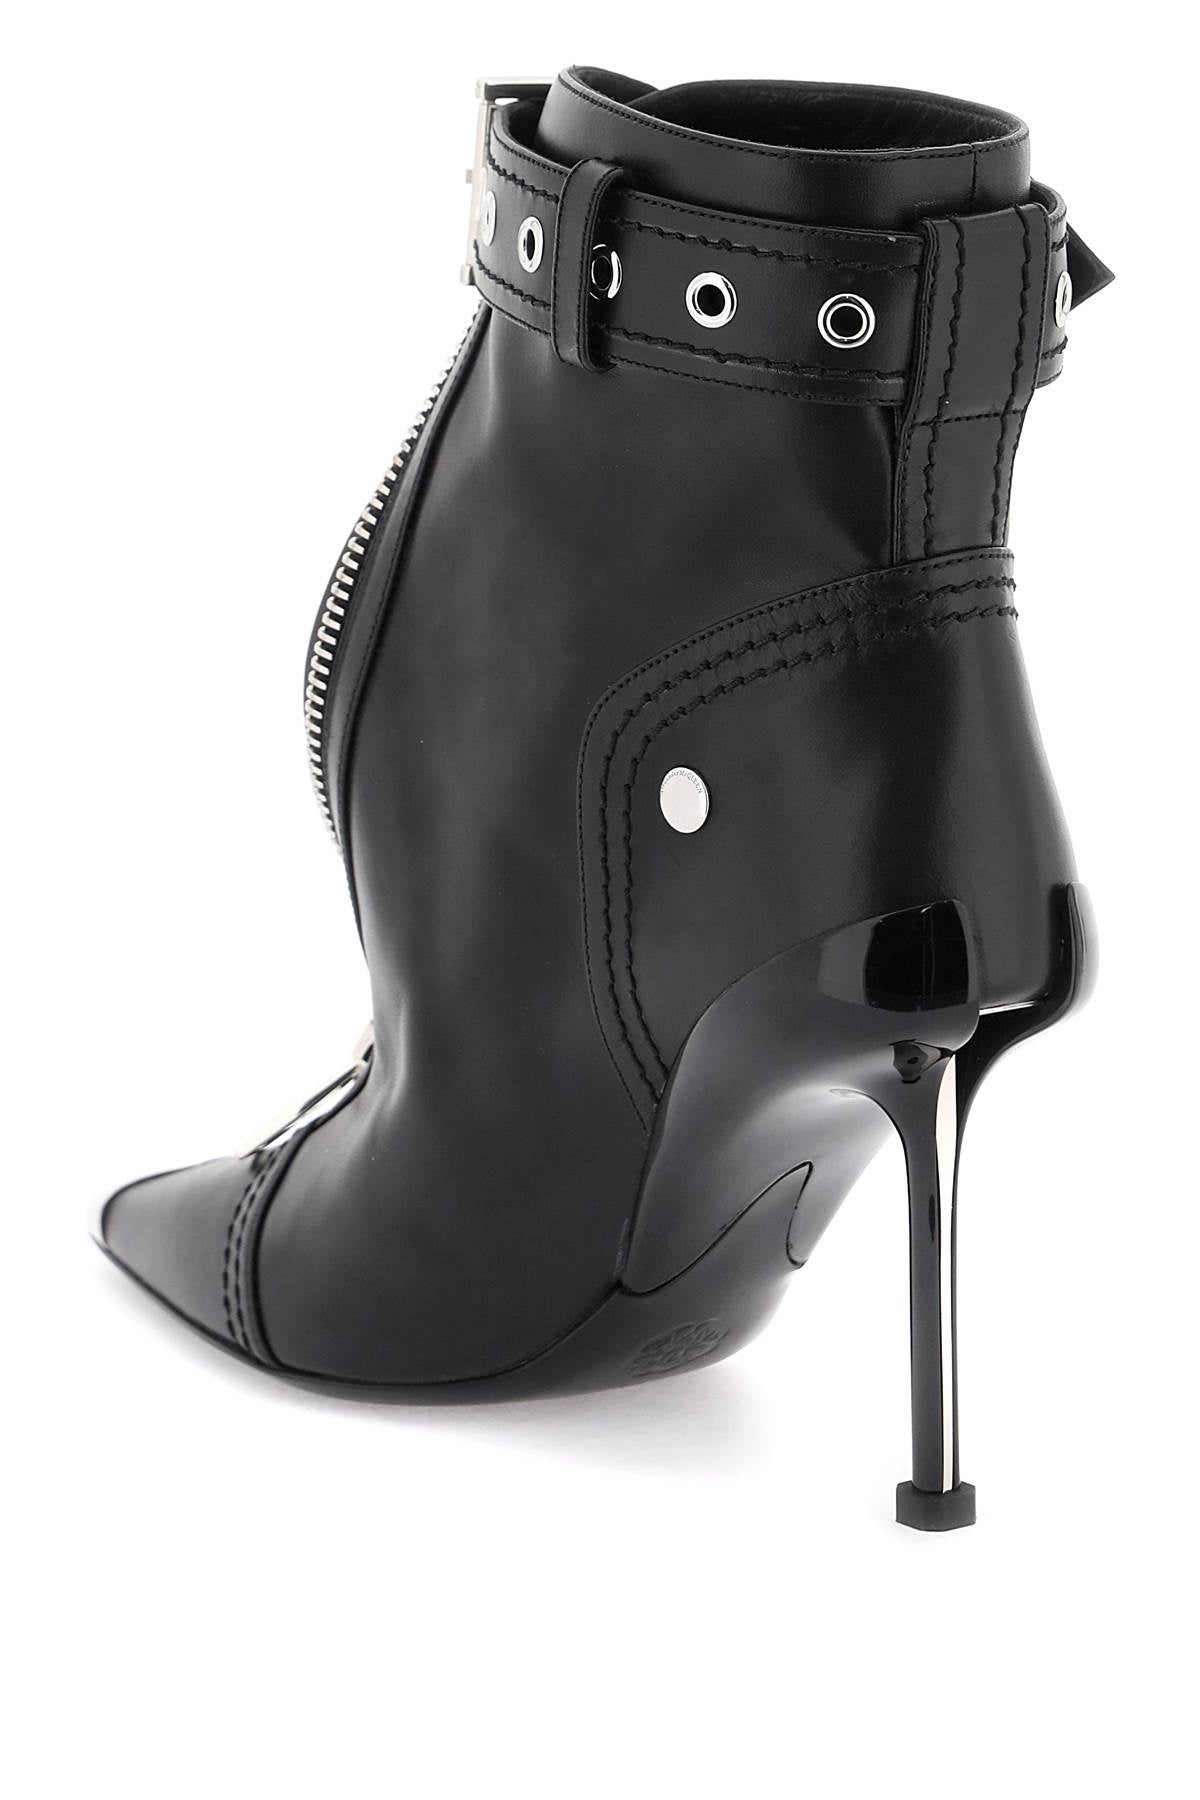 ALEXANDER MCQUEEN Sleek Leather Biker Ankle Boots for Women - Black